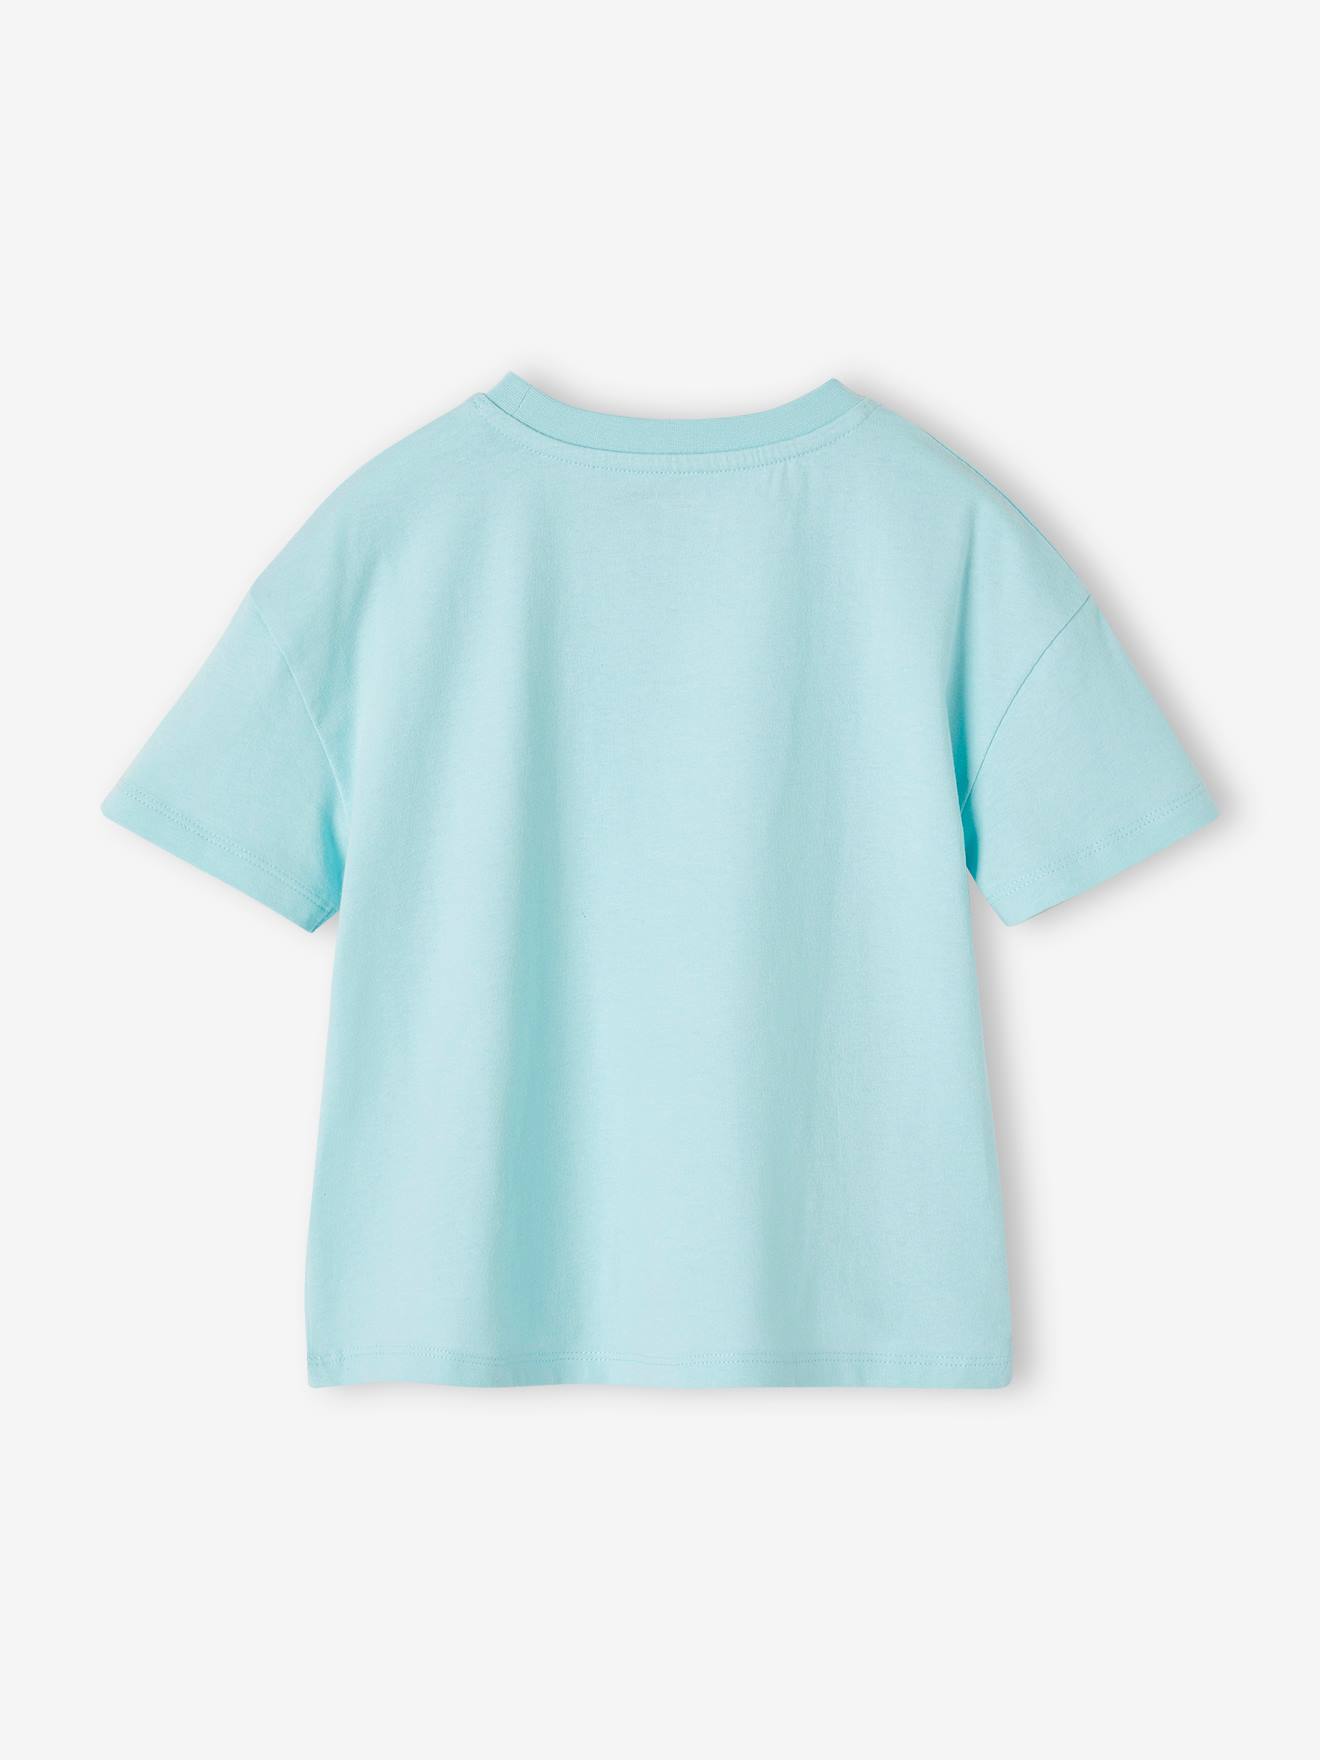 Camiseta lisa Basics de manga corta para niña rosa chicle - Vertbaudet